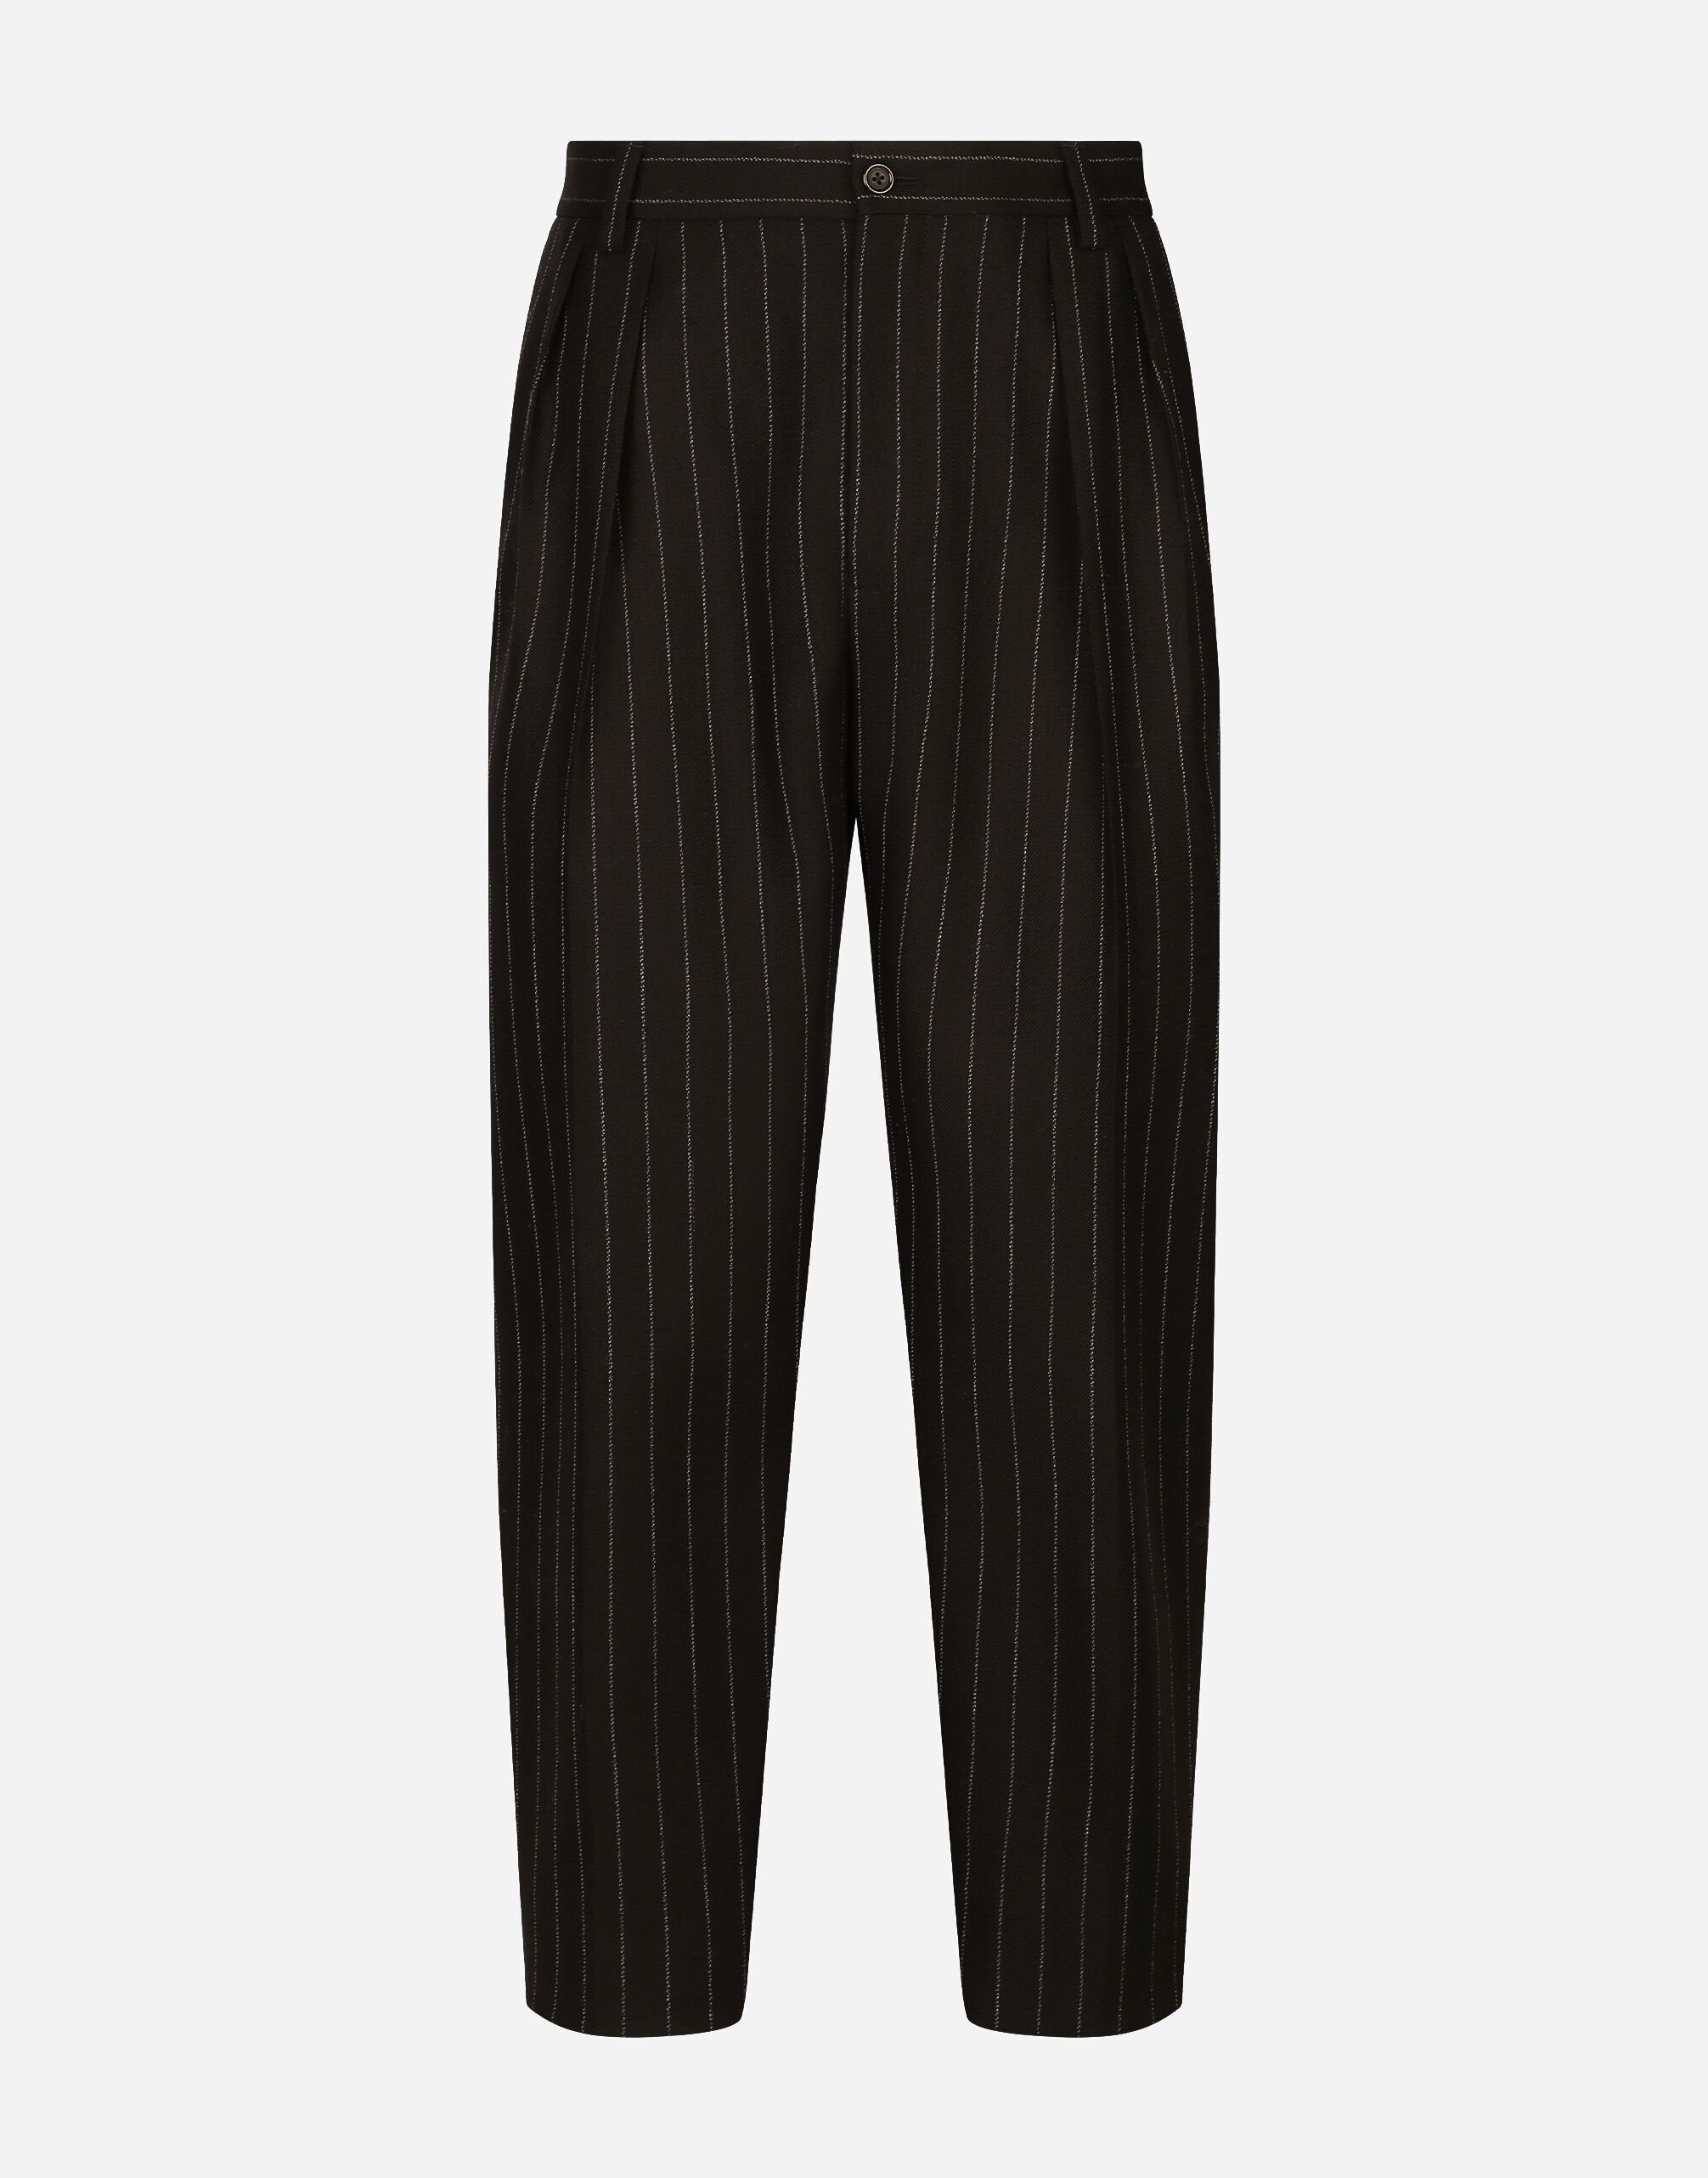 Dolce&Gabbana سروال صوف مخطط أسود G040VTHU7QV